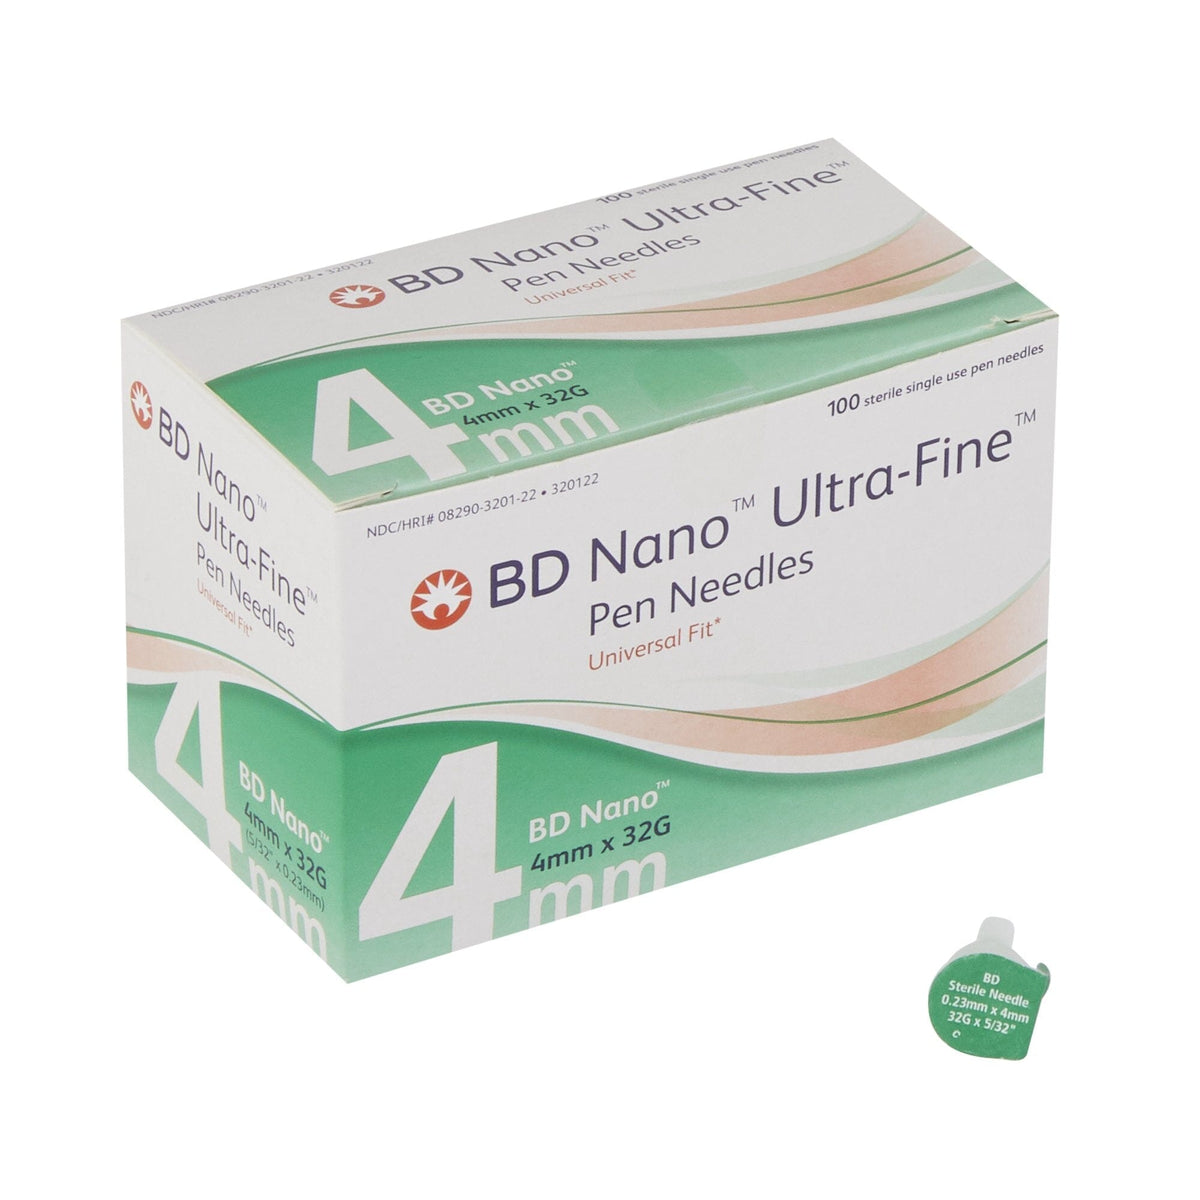 Buy BD Ultra-Fine III Insulin Pen Needles 32G 4mm Pack of 50 Online at